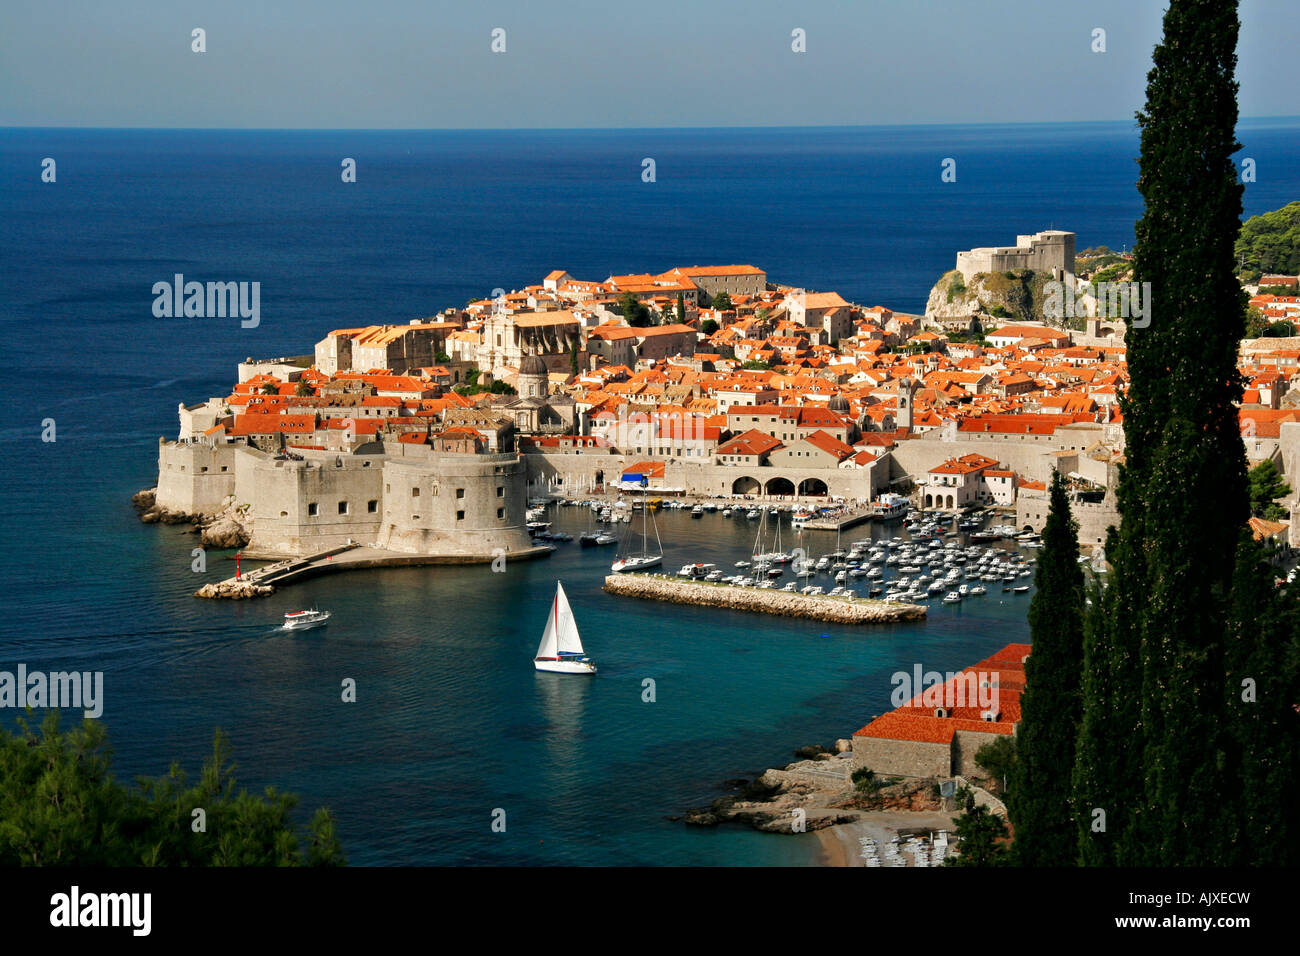 Kroatien Dubrovnik, Altstadt von Dubrovnik mit Segelyacht | Croazia Città Vecchia di Dubrovnik con yacht a vela Foto Stock